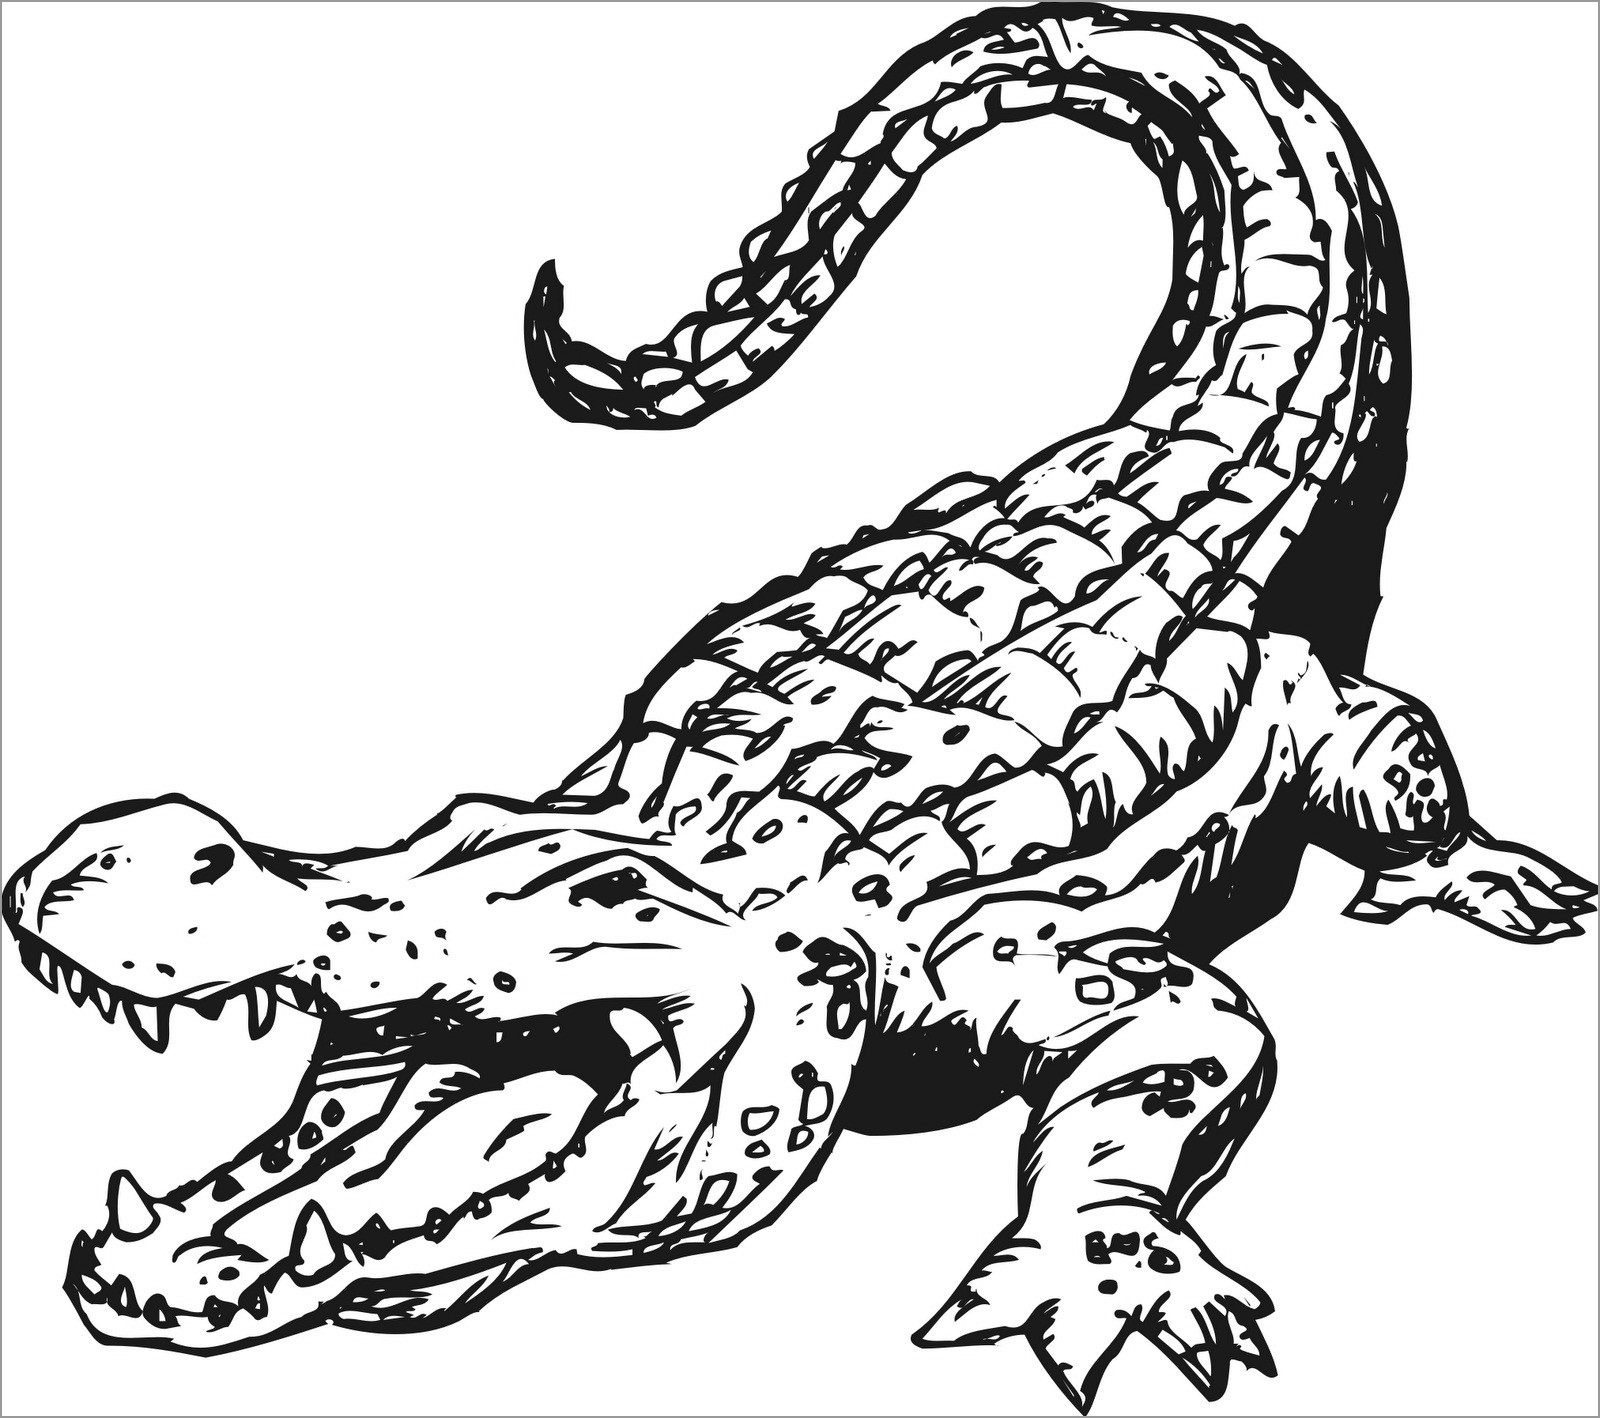 Alligator Coloring Pages Preschool